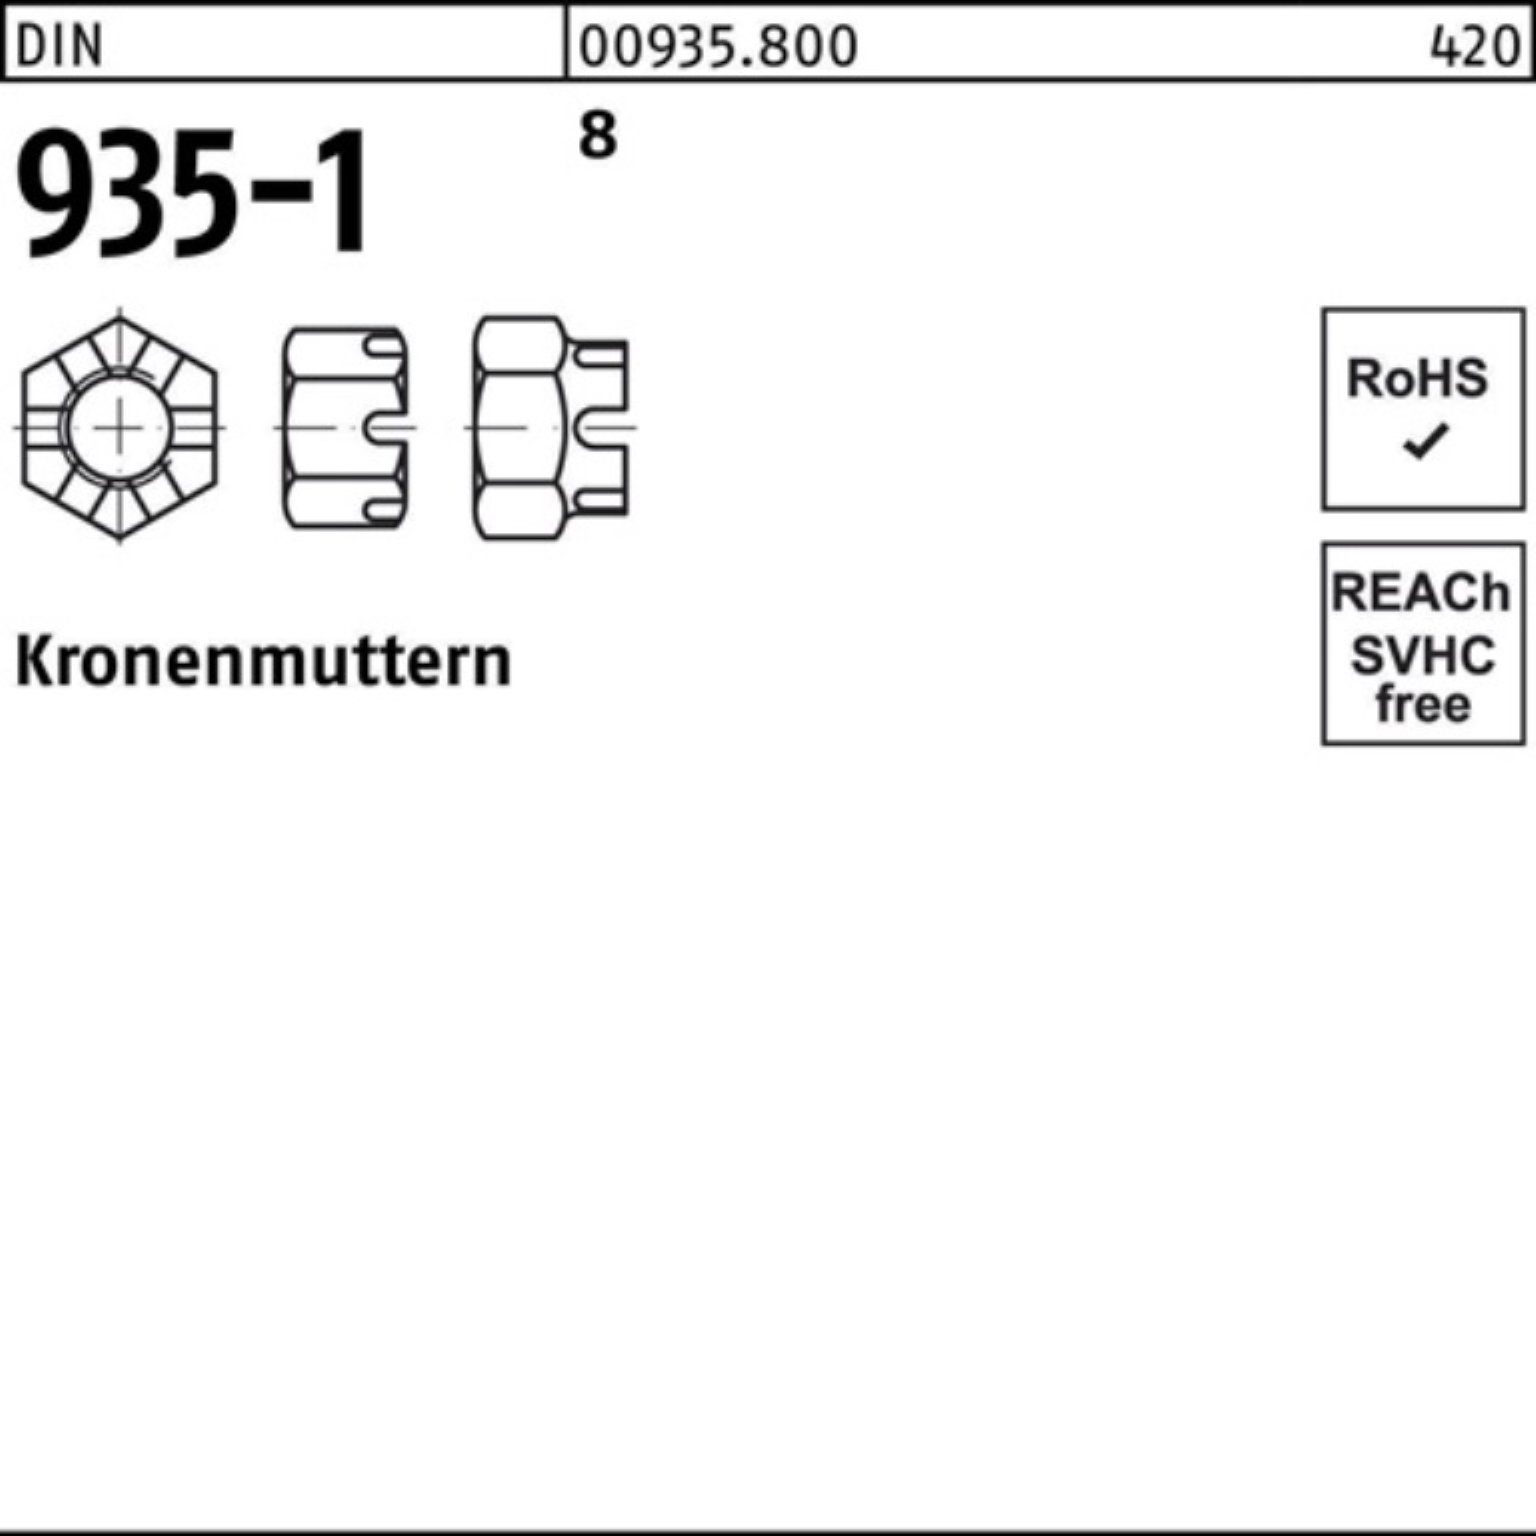 Reyher Kronenmutter 100er Pack DIN 8 DIN 10 Kronenmutter 935-1 Kronenmu 935-1 8 M30 Stück